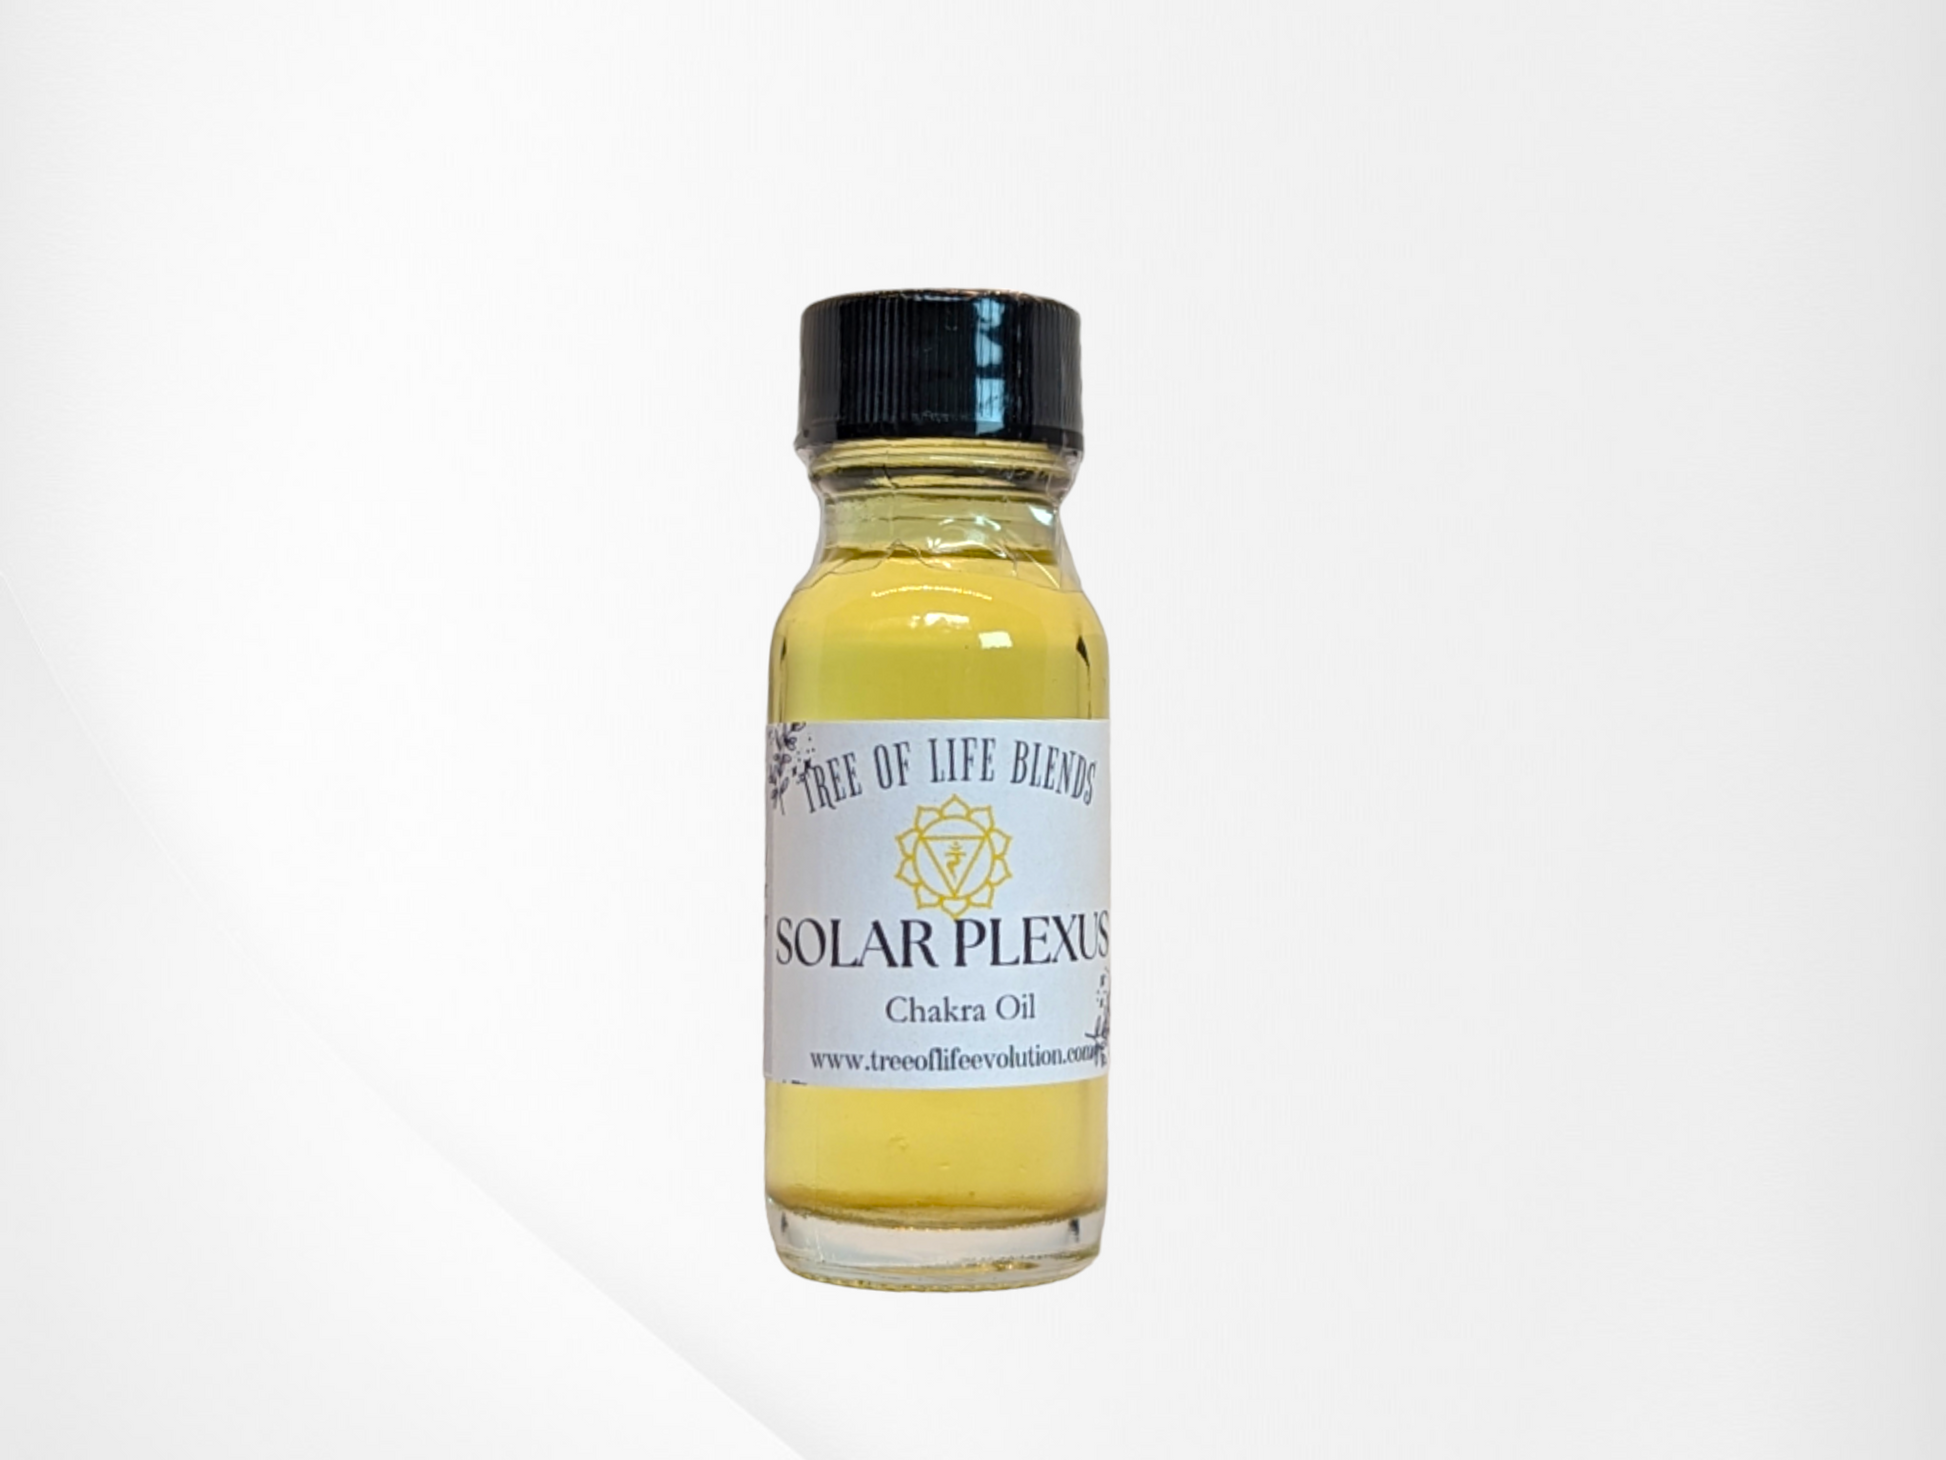 Solar Plexus chakra oil from Tree of Life on white background